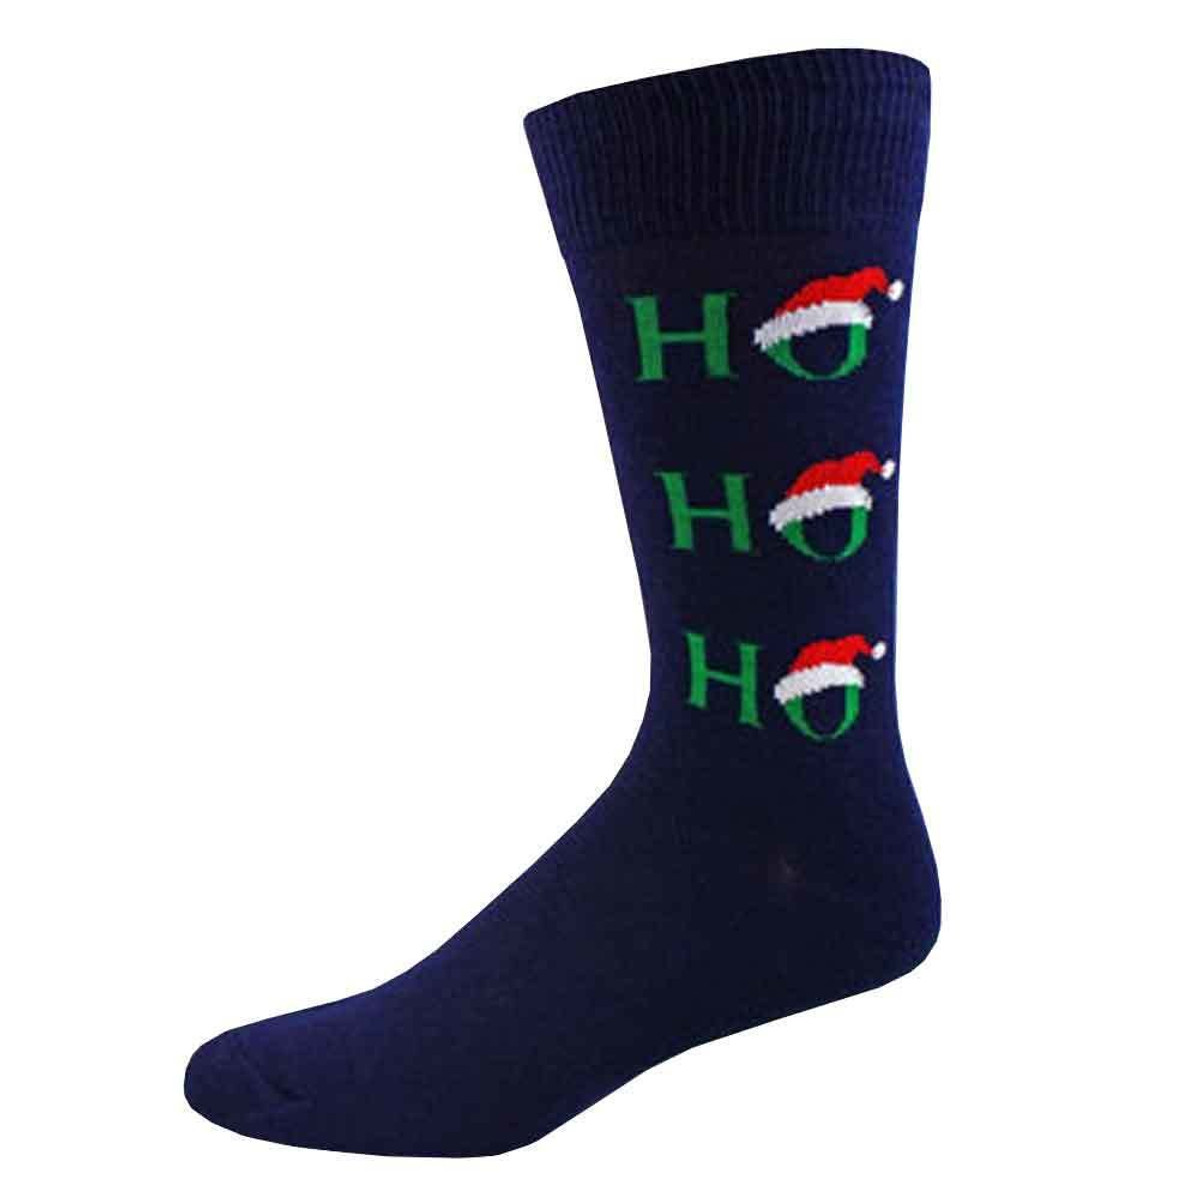 Pair of Men's Ho Ho Ho Christmas Hat Pattern Novelty Crew Socks - Navy Blue